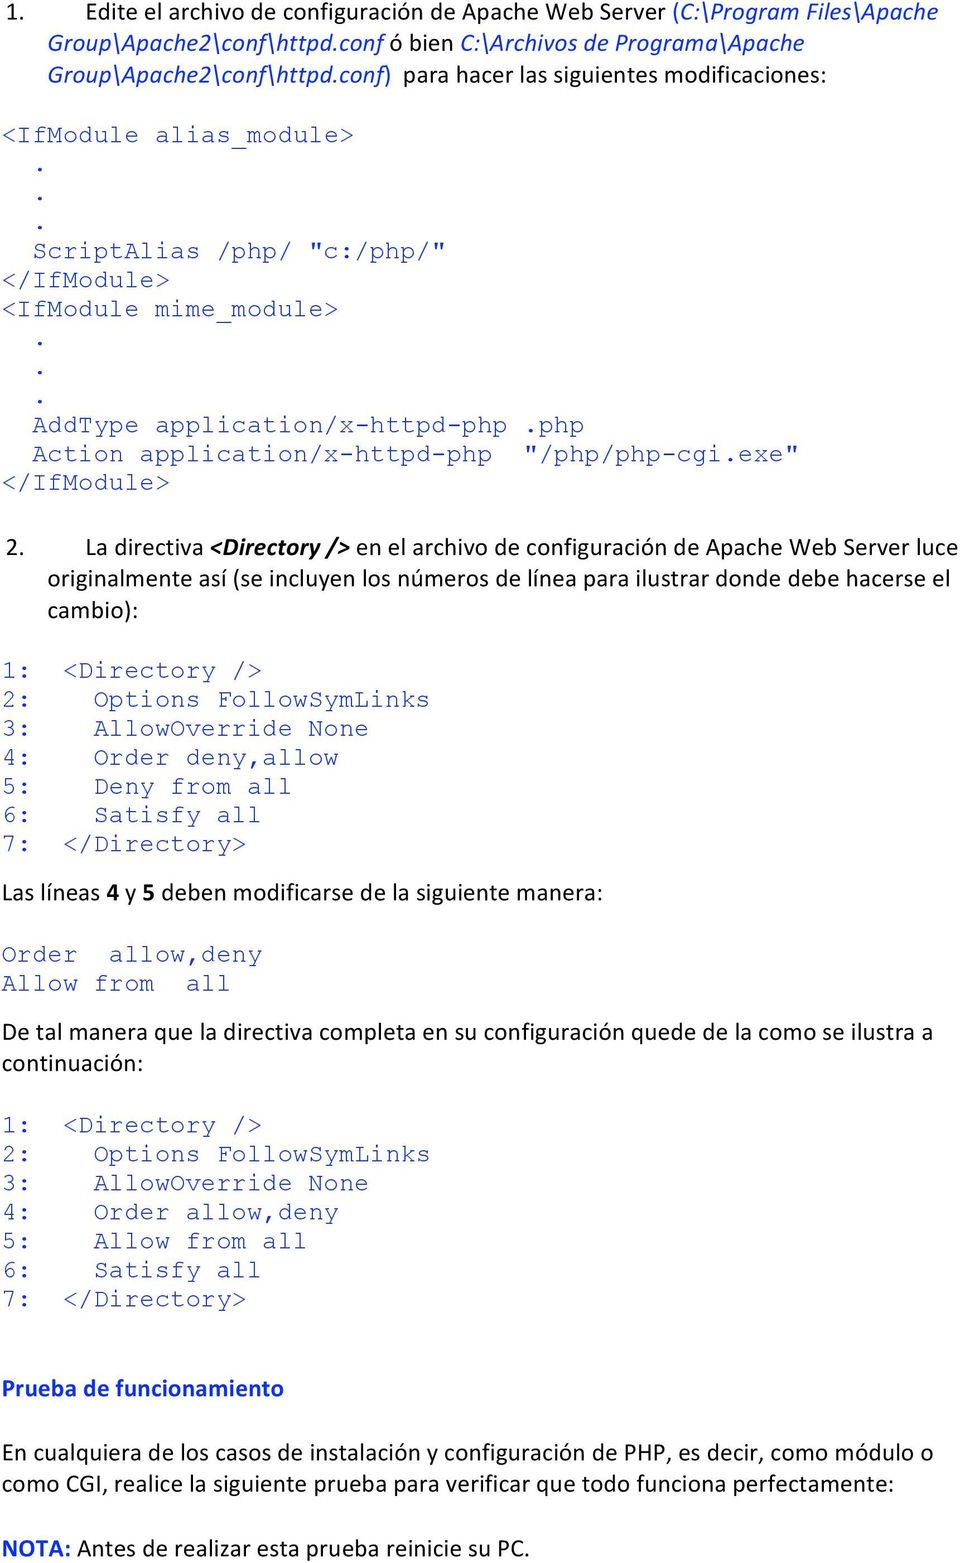 application/x-httpd-php "/php/php-cgiexe" 2 Ladirectiva<Directory/>enelarchivodeconfiguracióndeApacheWebServerluce originalmenteasí(seincluyenlosnúmerosdelíneaparailustrardondedebehacerseel cambio):